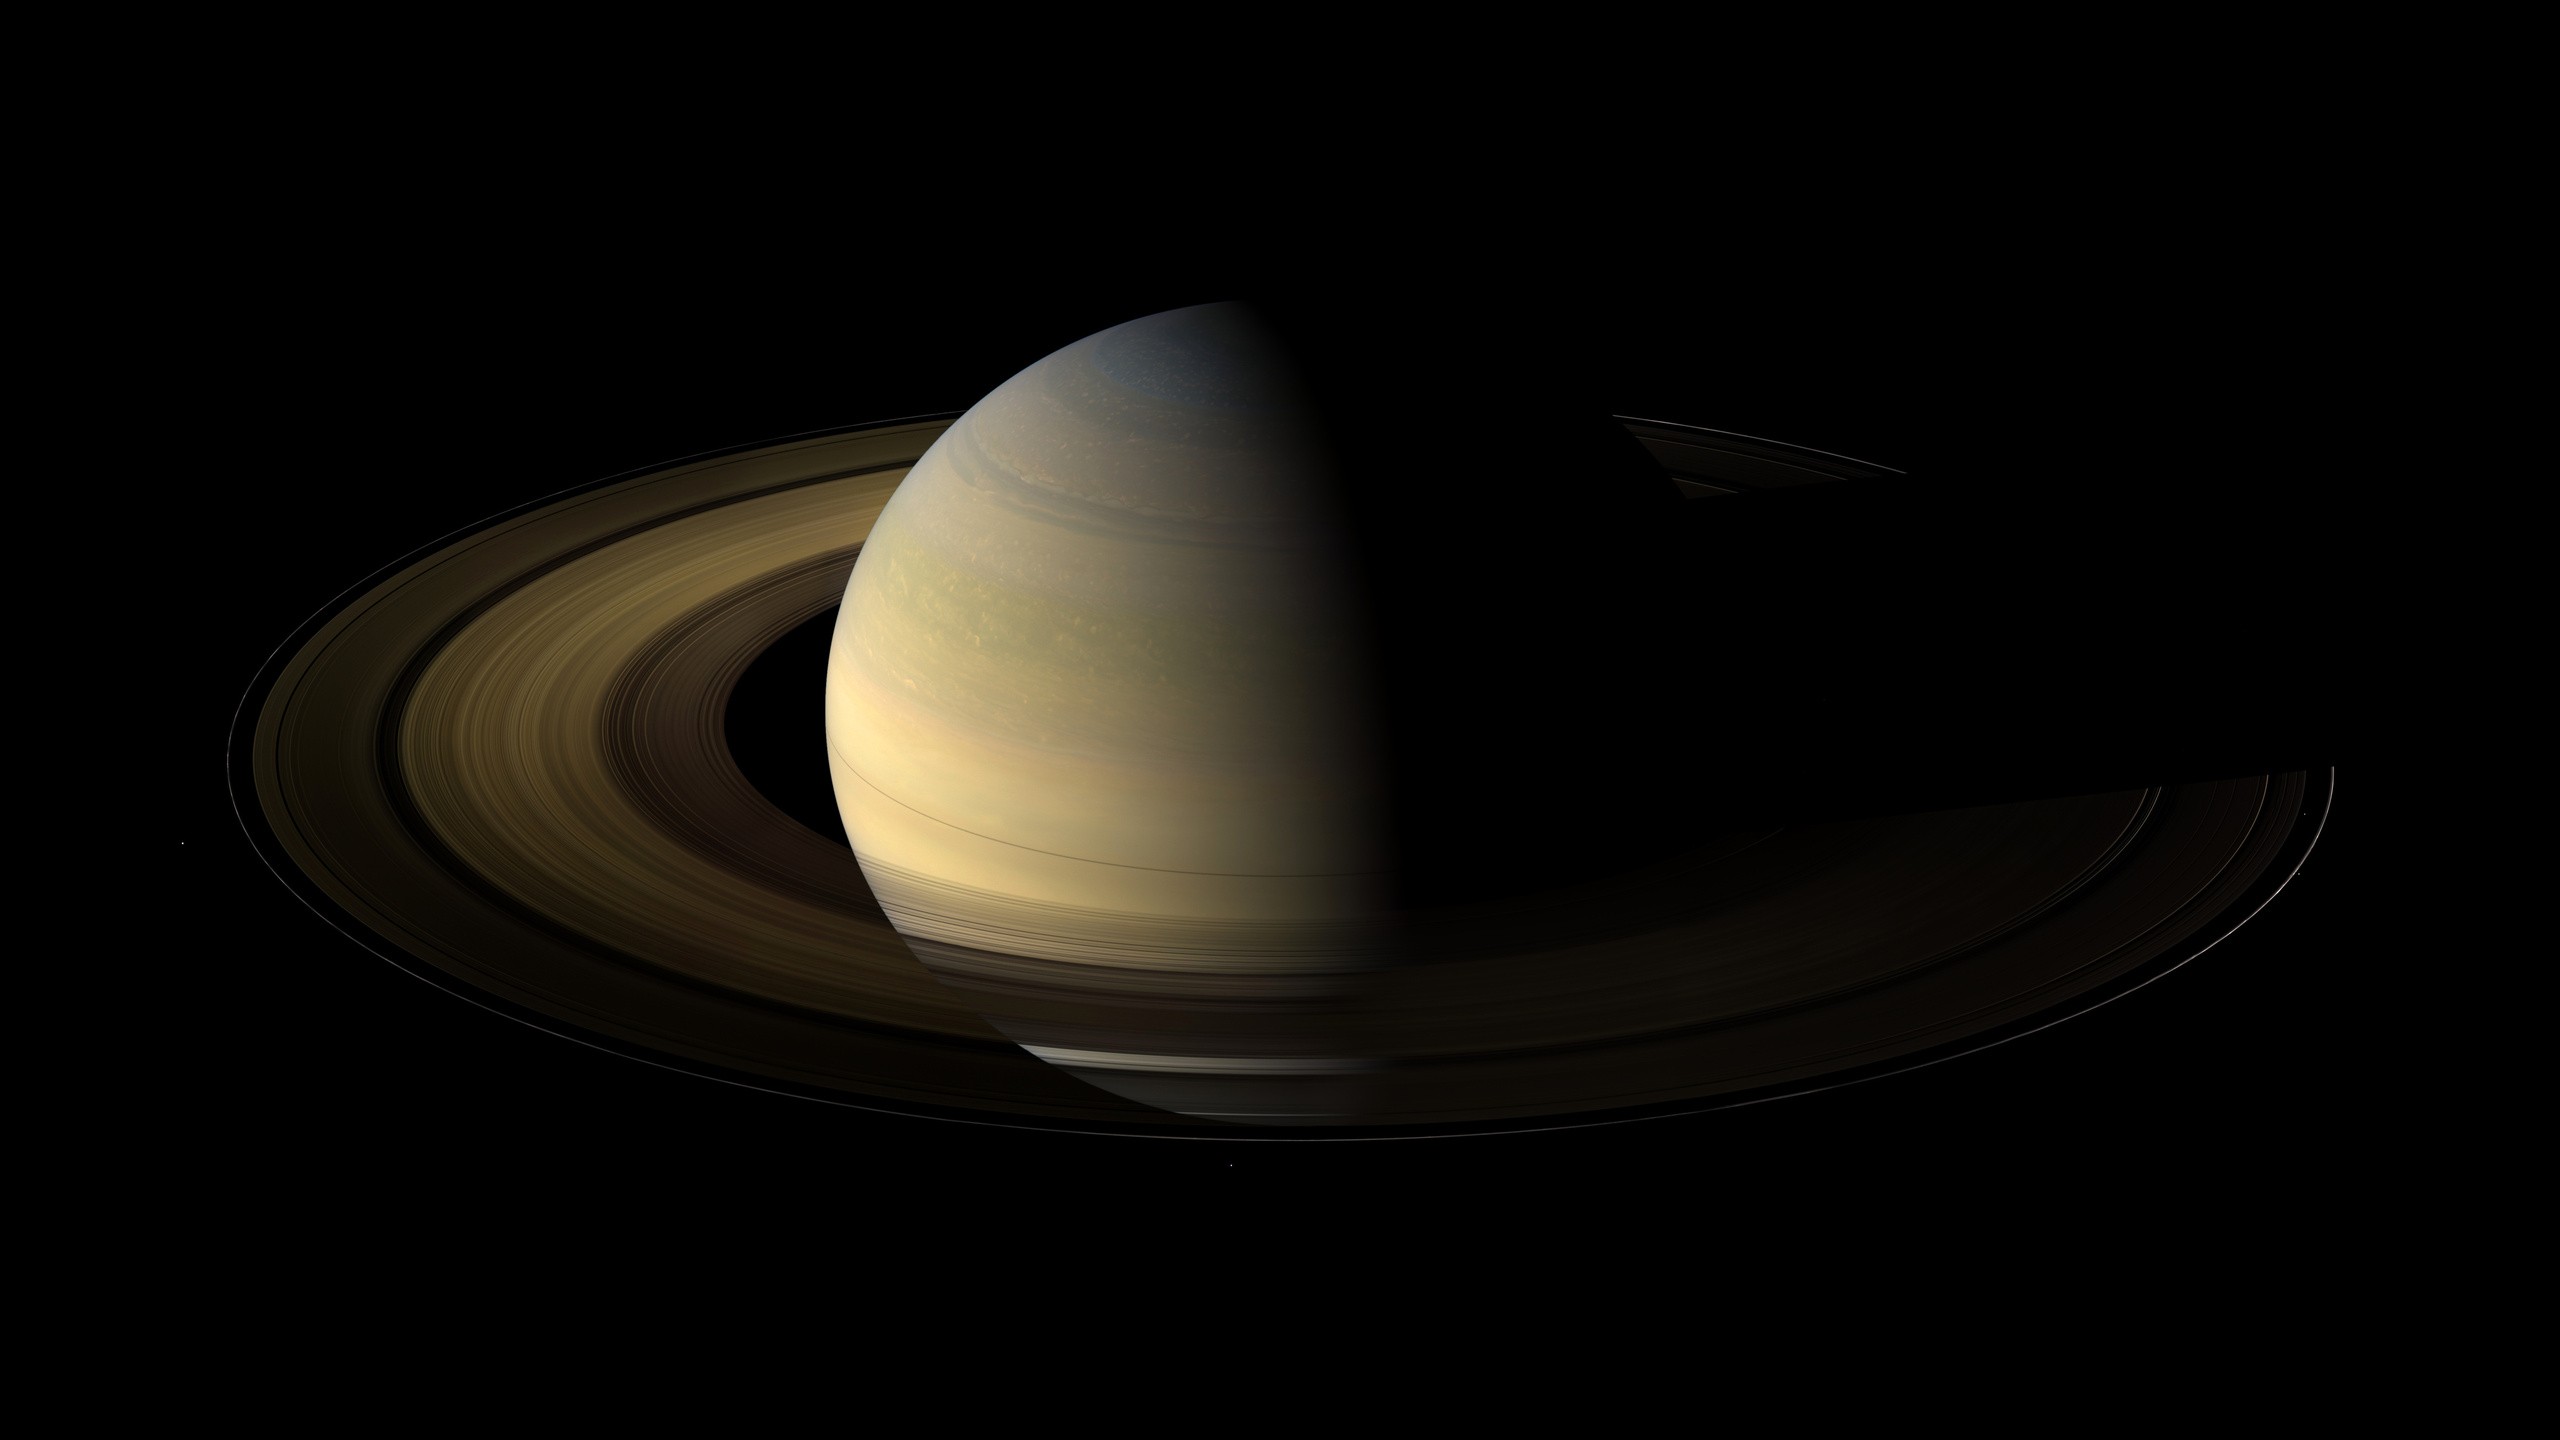 General 2560x1440 space universe planet Saturn black background space art digital art Solar System